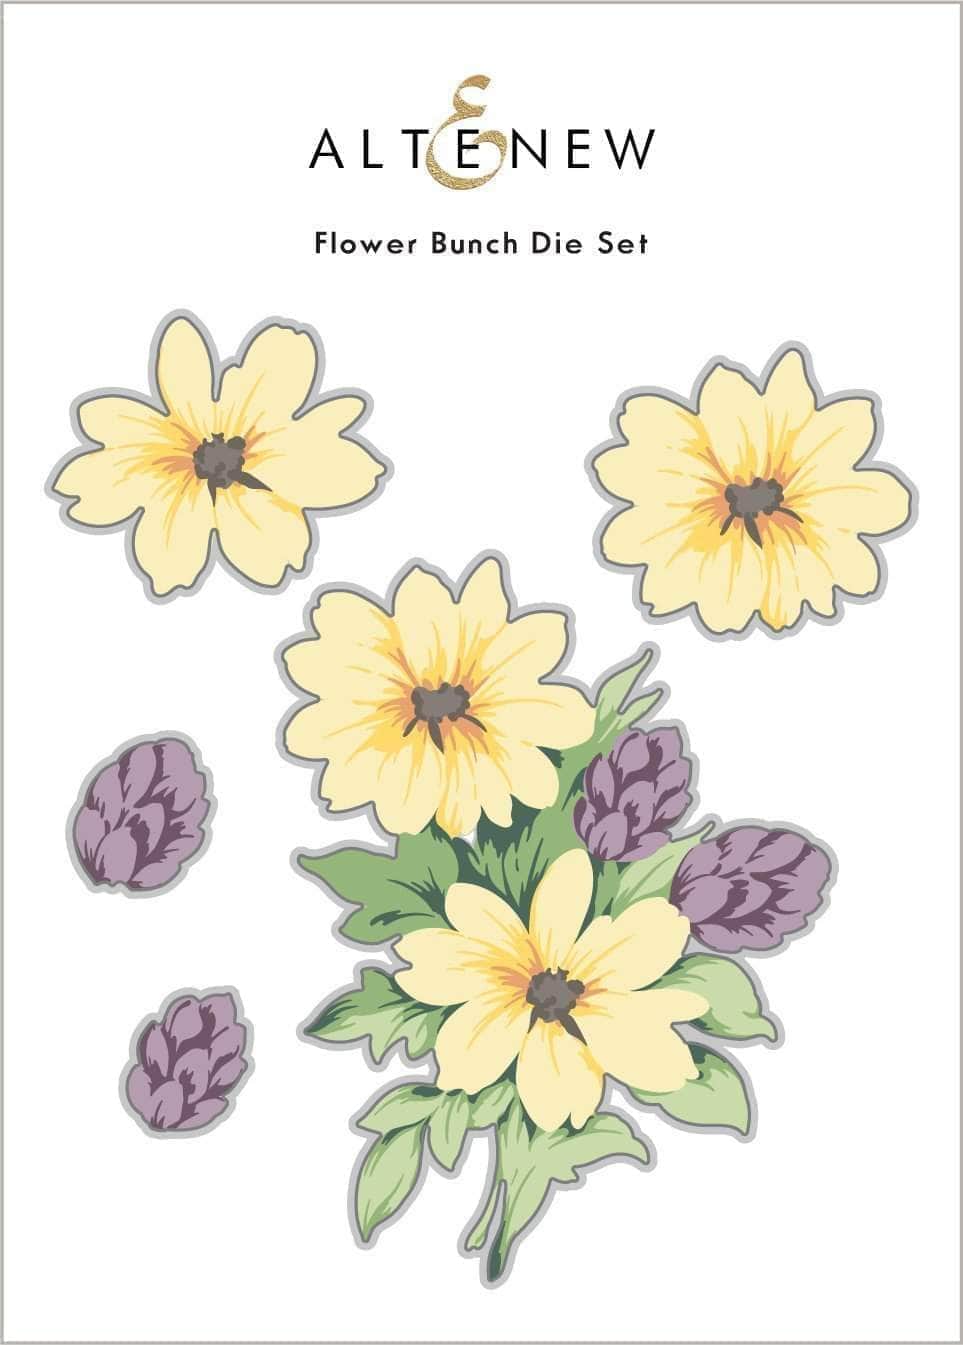 Dies Flower Bunch Die Set